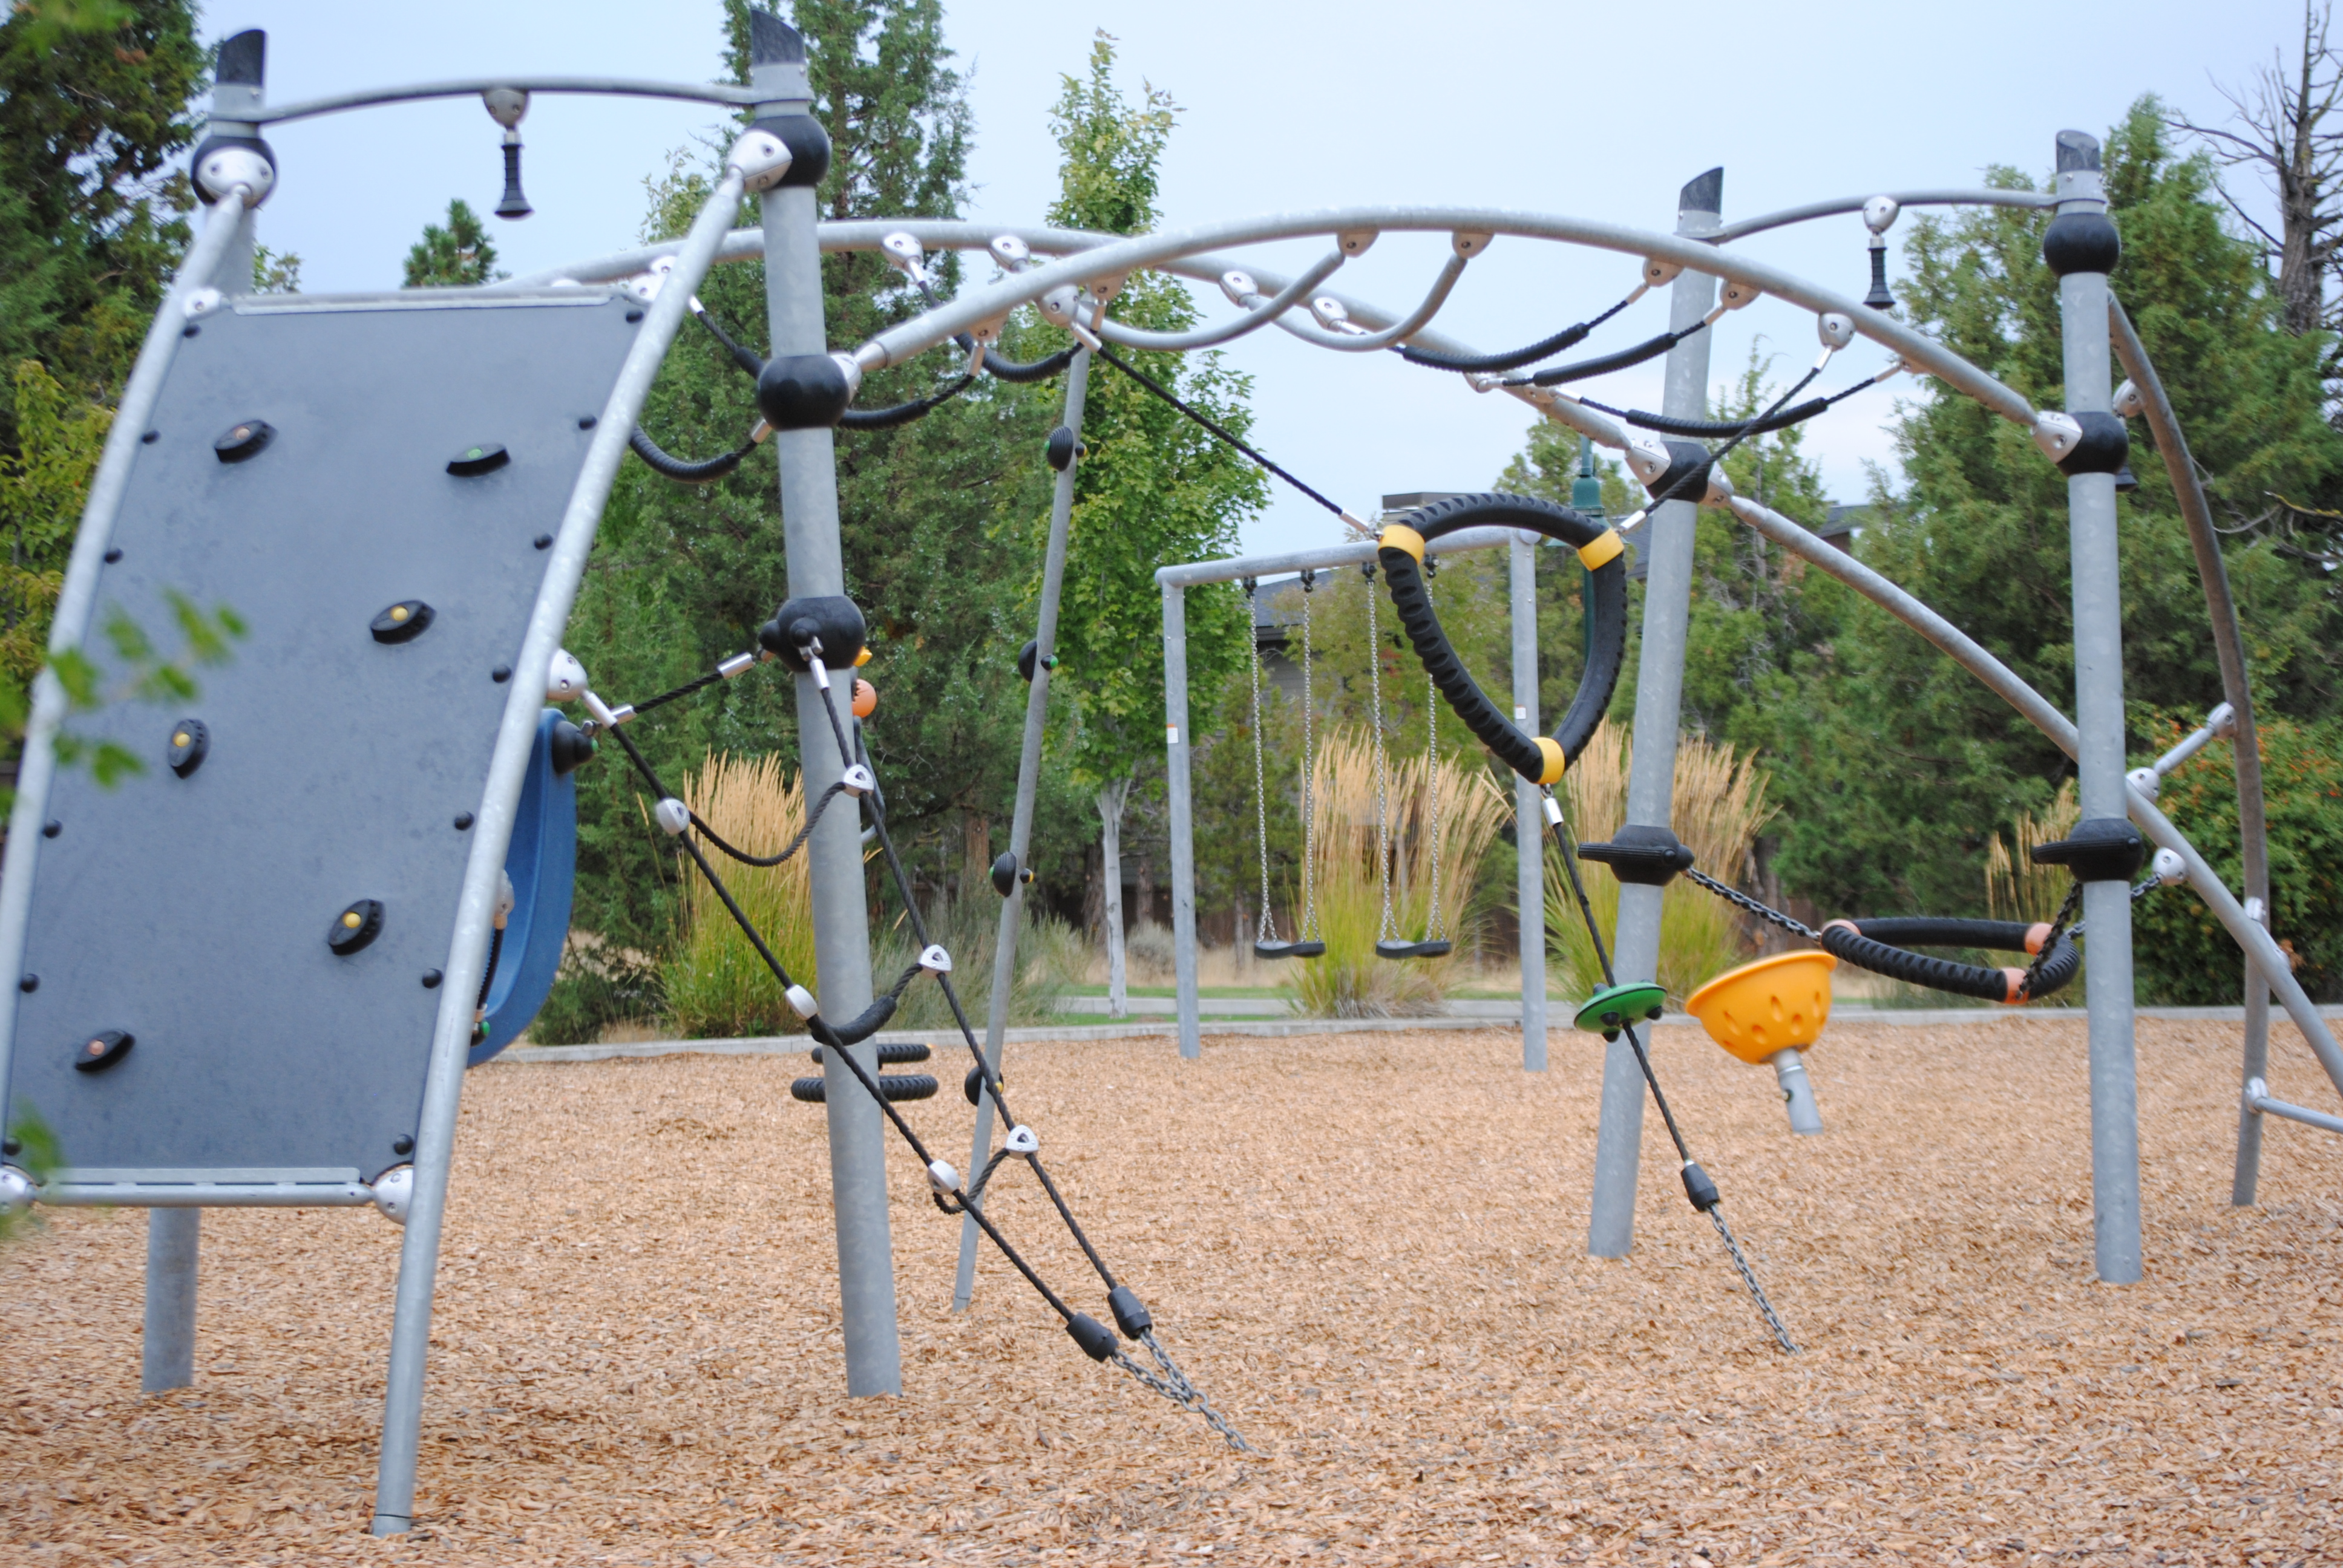 The playground at Sawyer Uplands